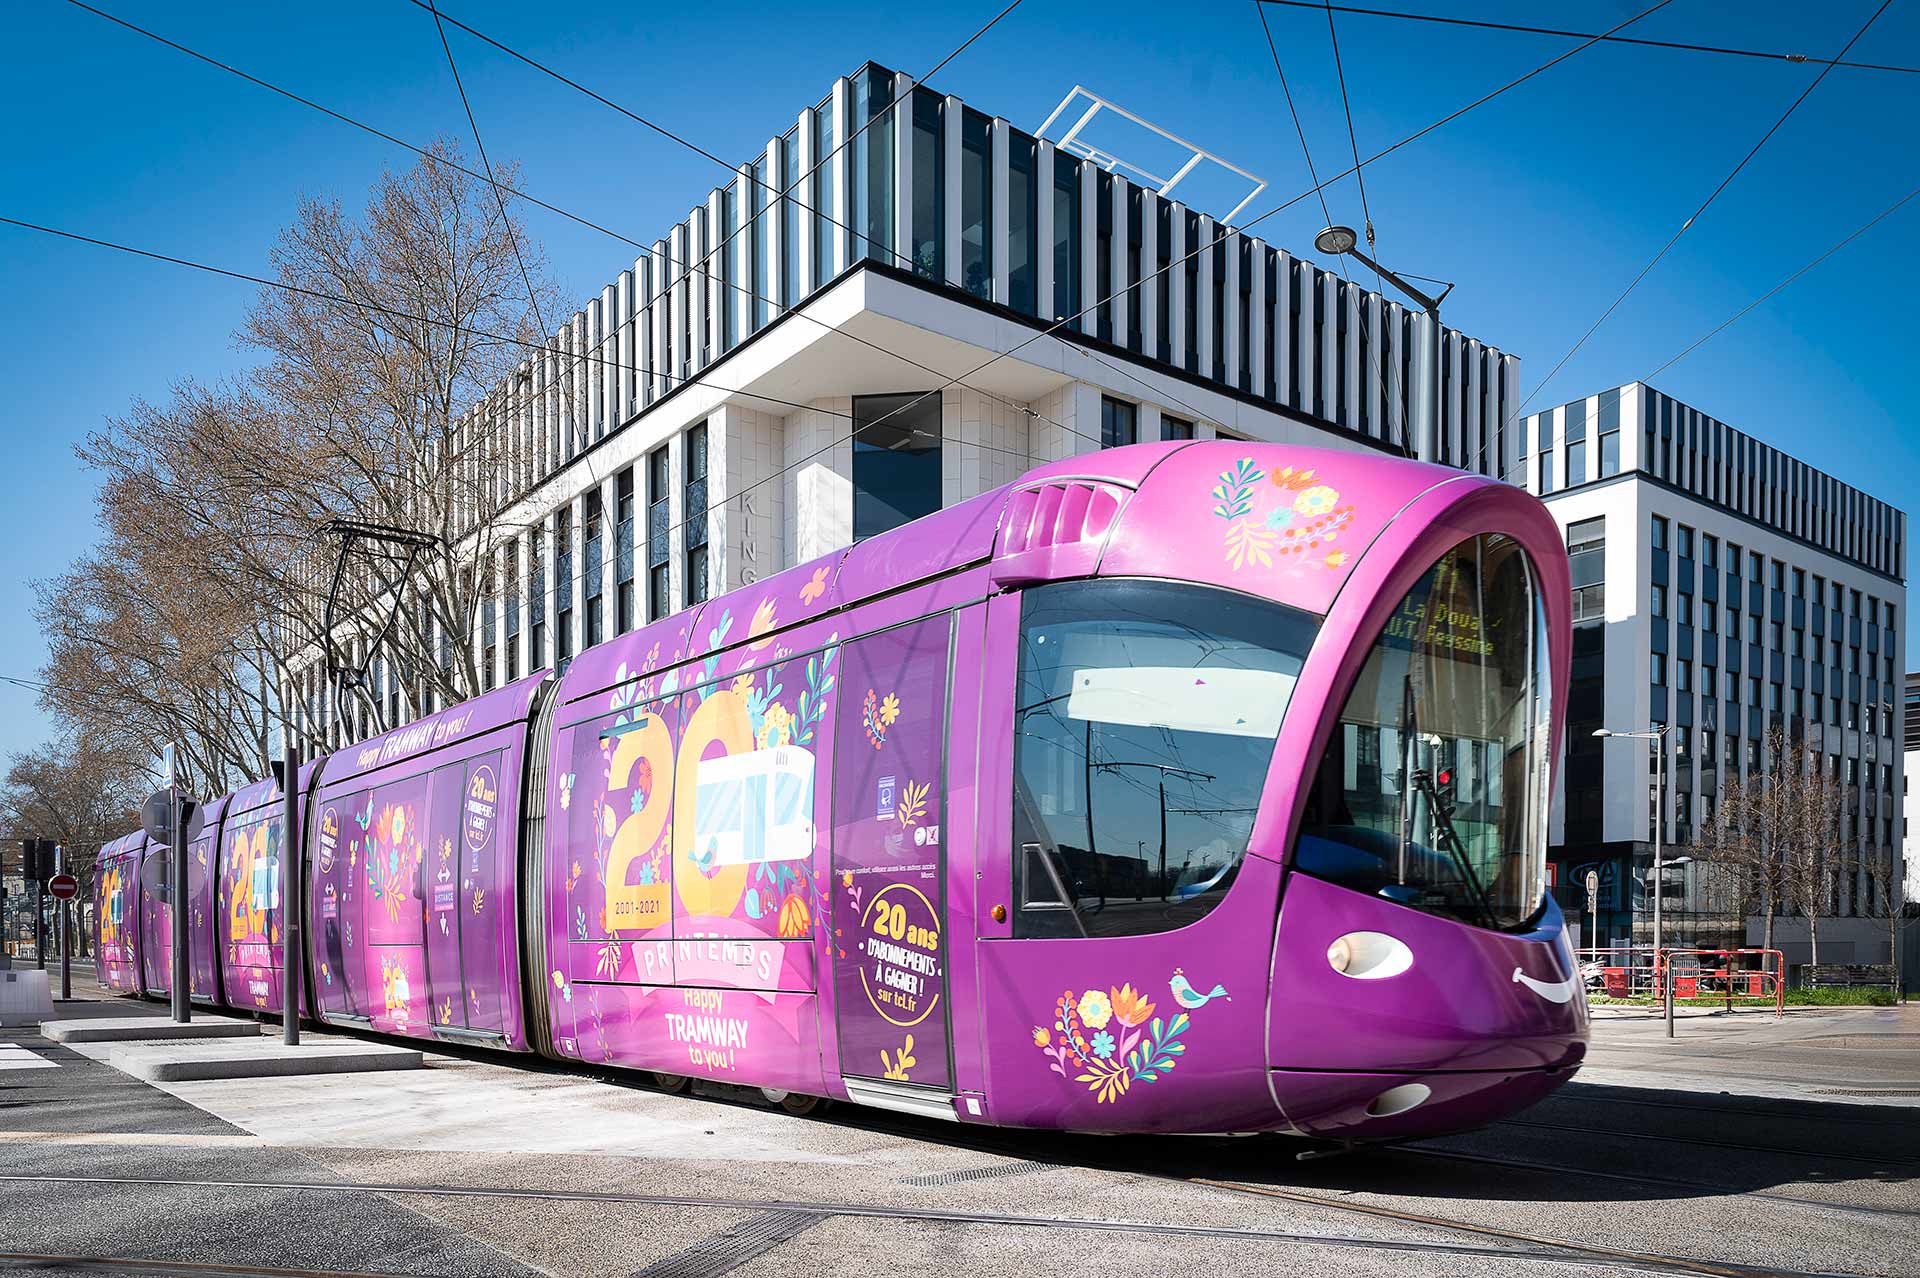  tramway T1 à Lyon Confluence (Montrochet)